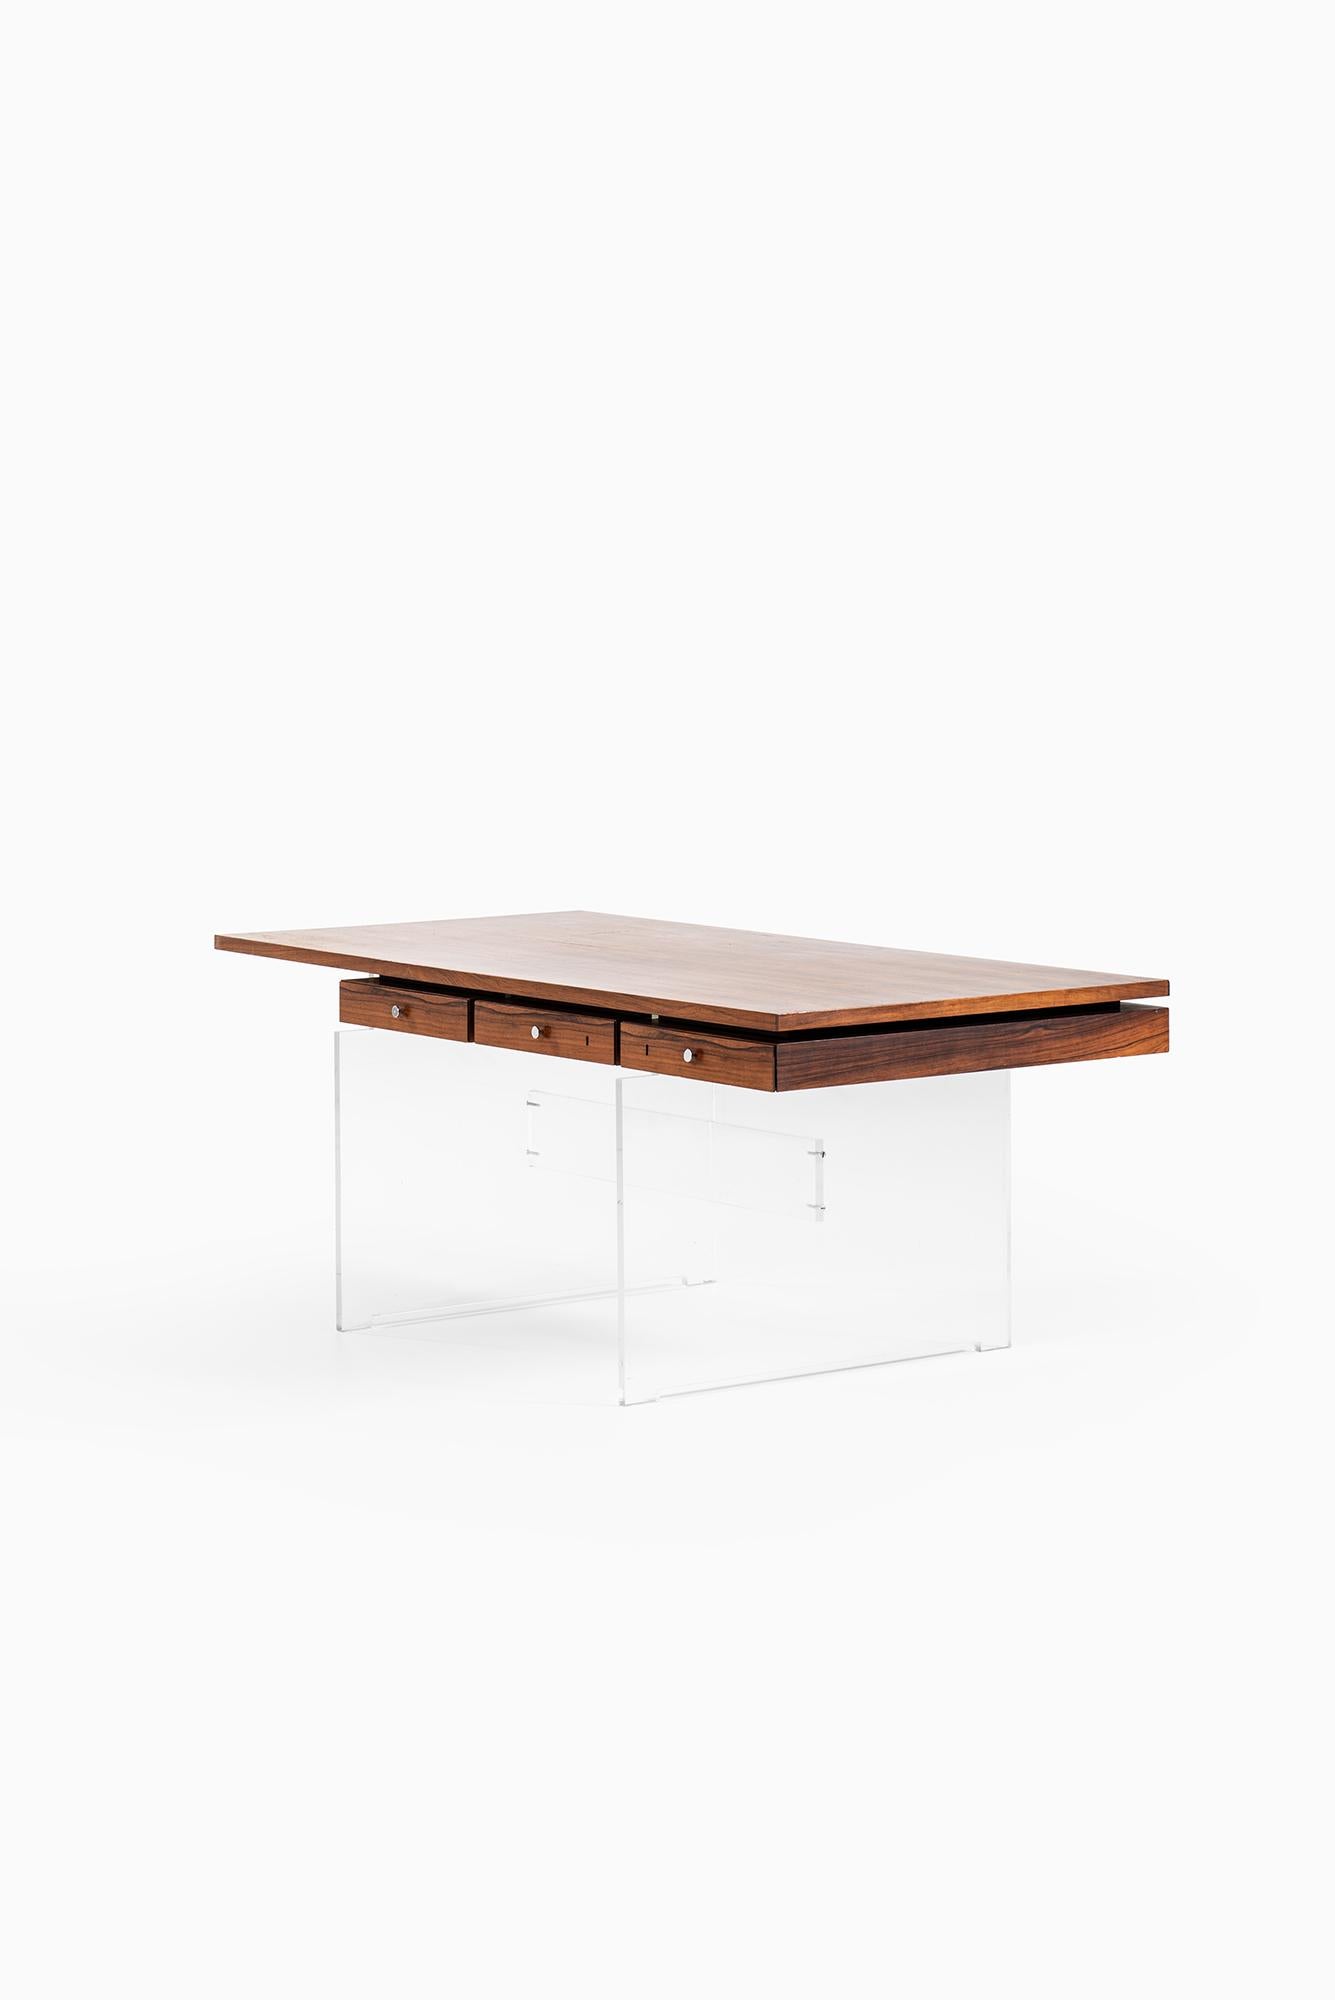 Poul Nørreklit Freestanding Desk by Sigurd Hansens Møbelfabrik in Denmark 1